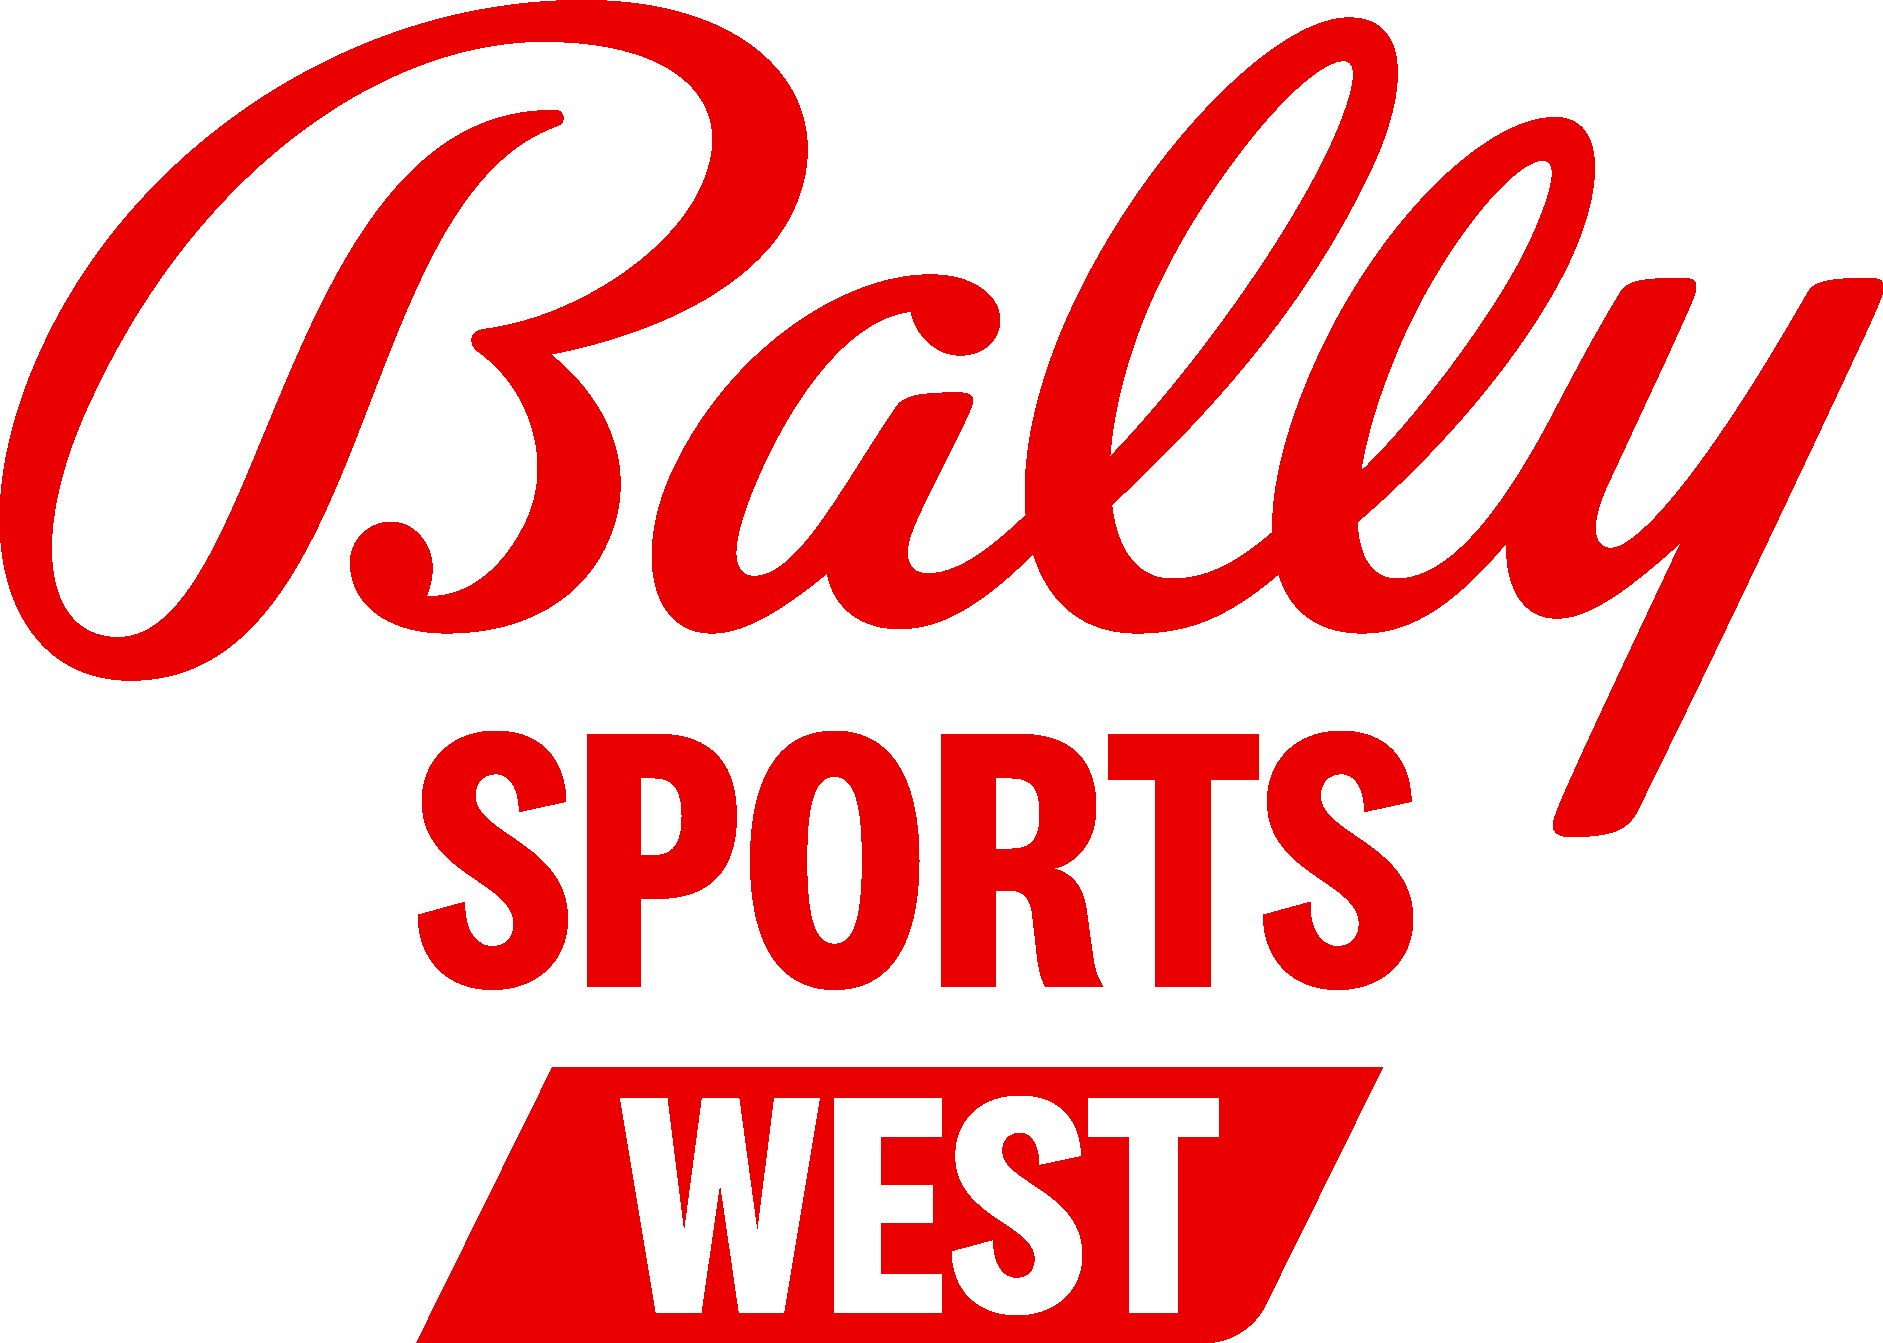 Bally sports west Logo Vector